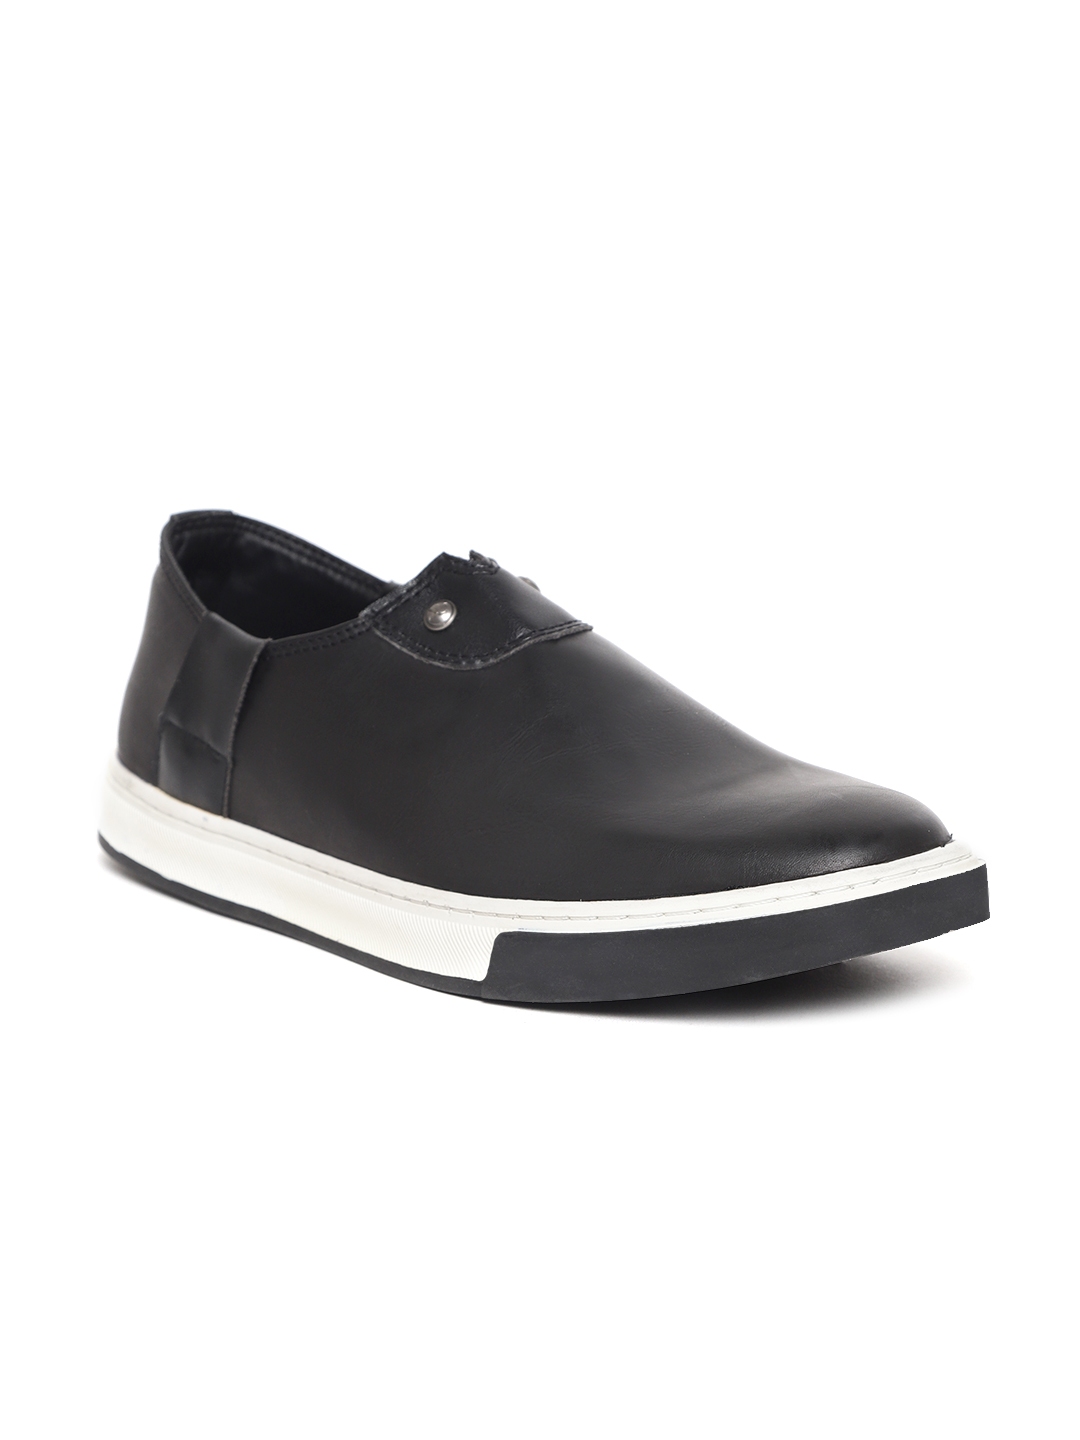 Buy Numero Uno Men Black Slip On Sneakers - Casual Shoes for Men ...